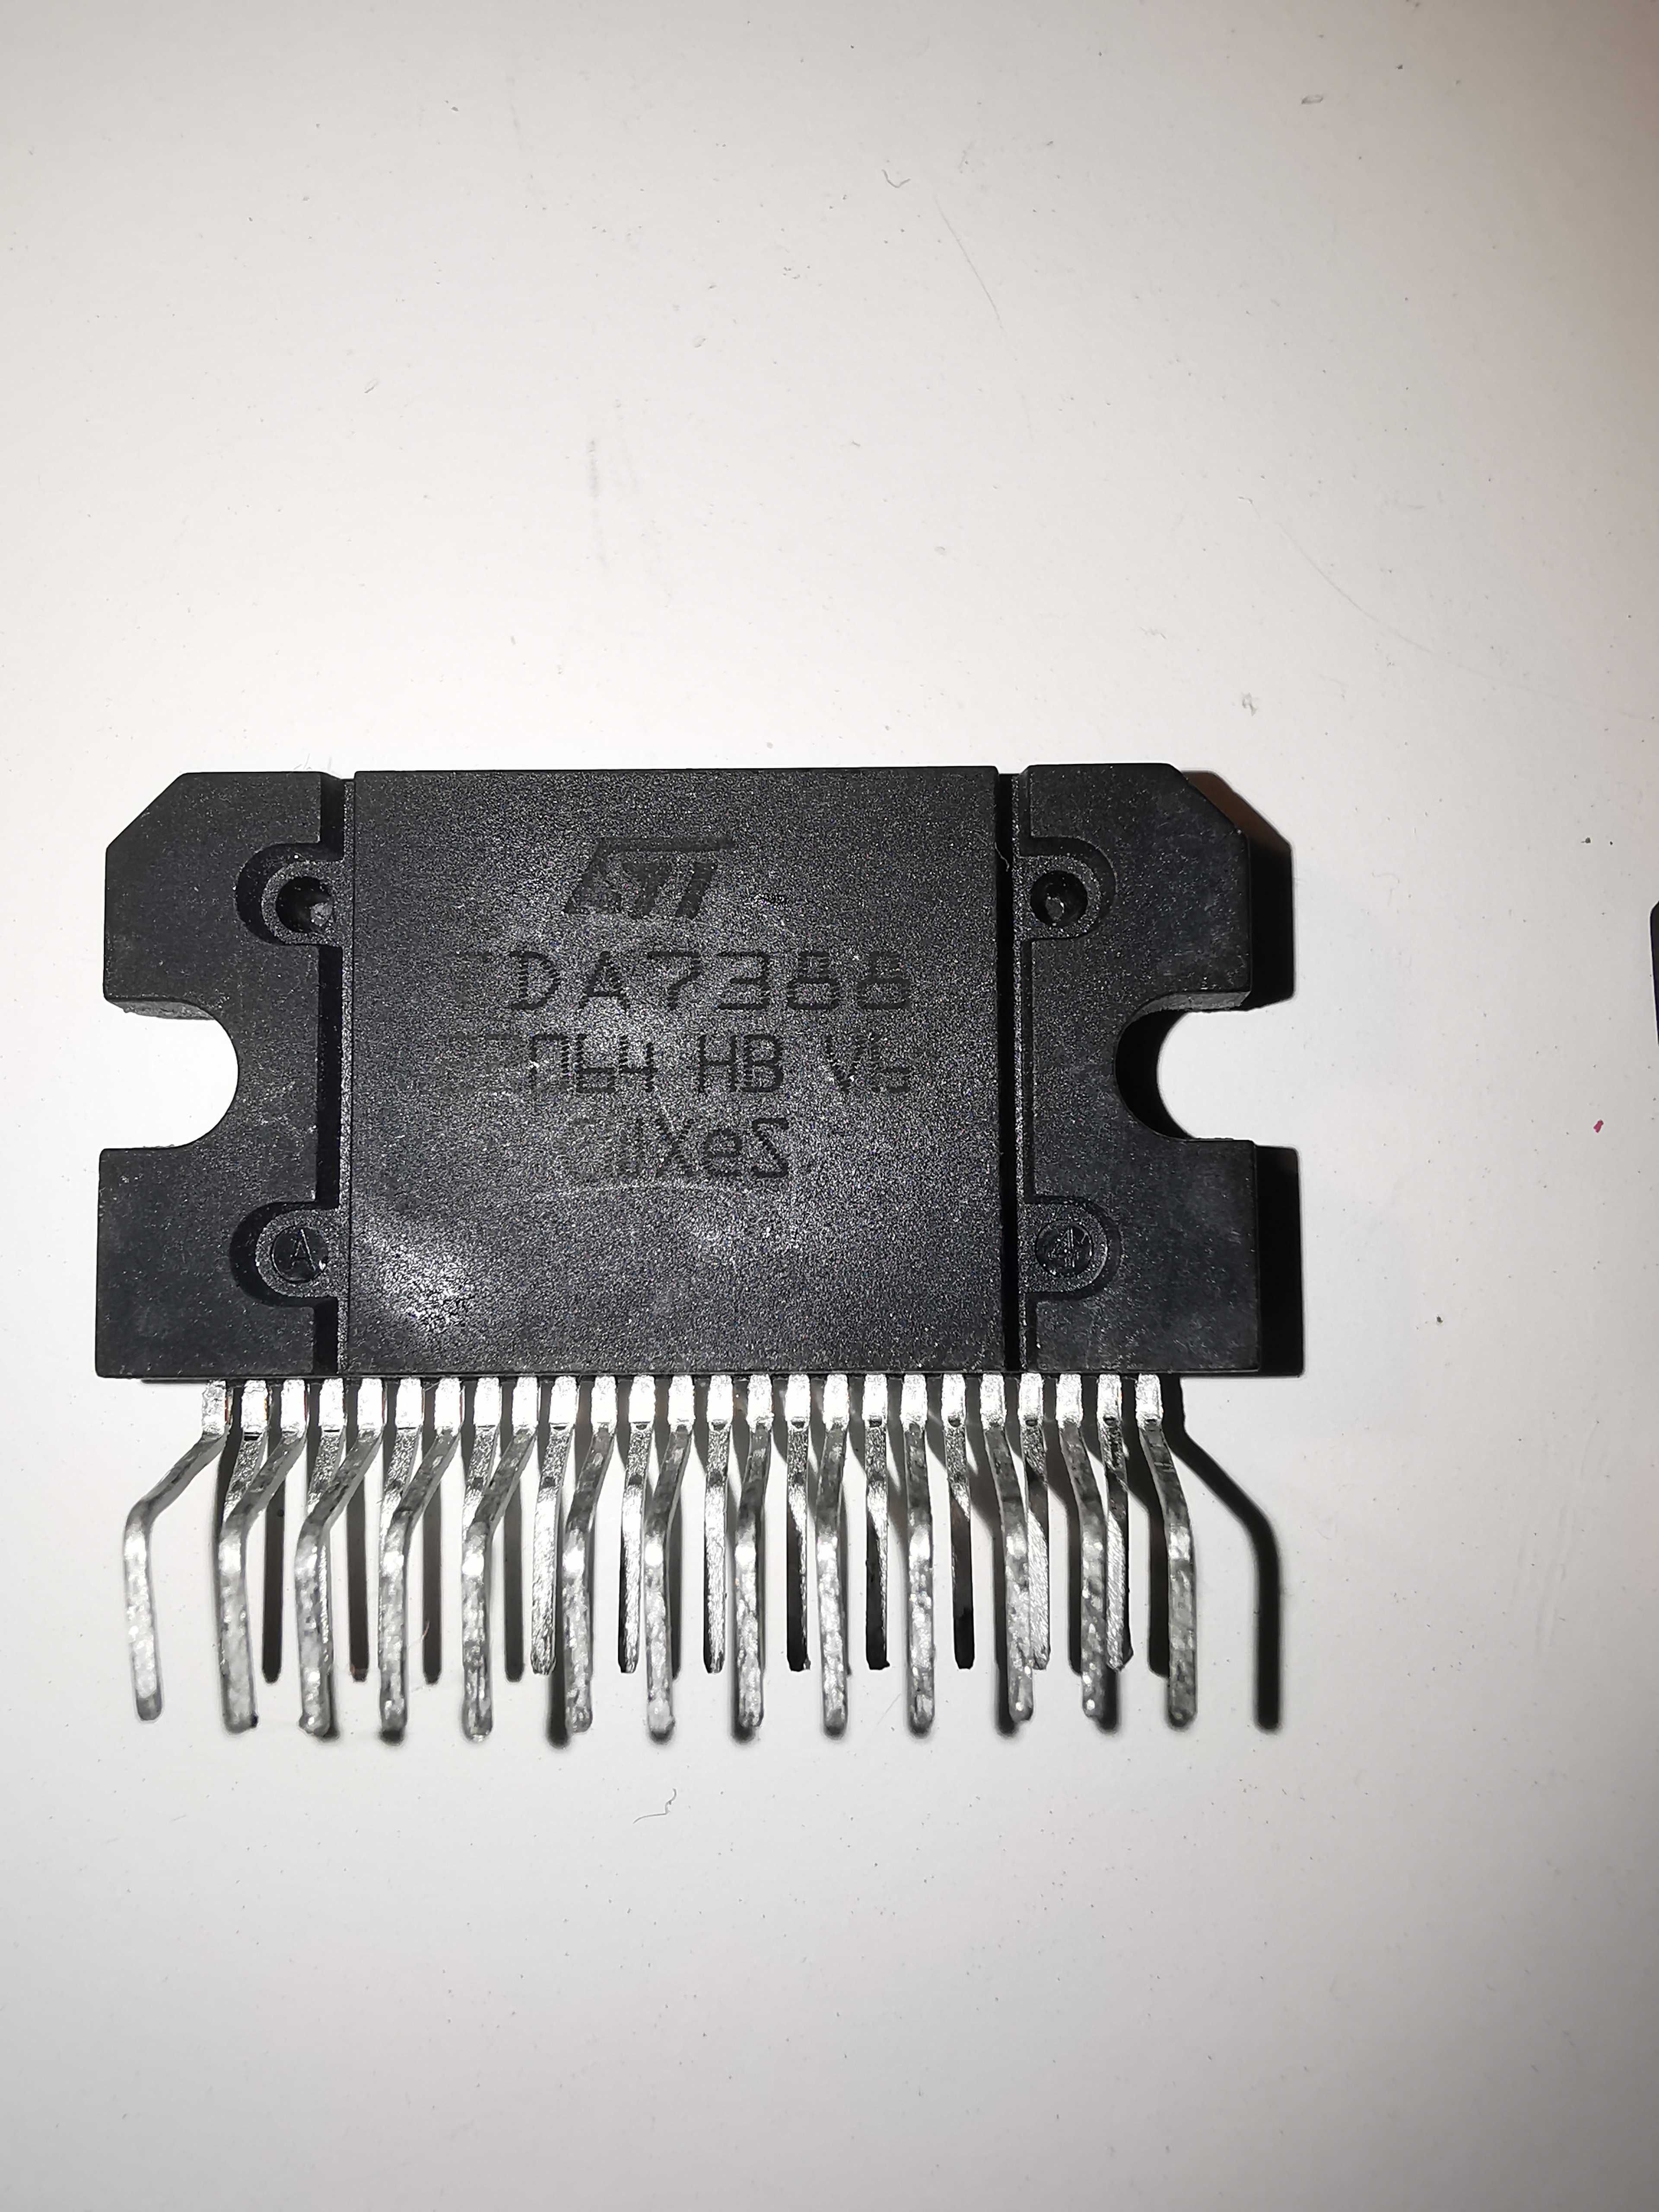 Circuit integrat de amplificare 4x45w tda 7380